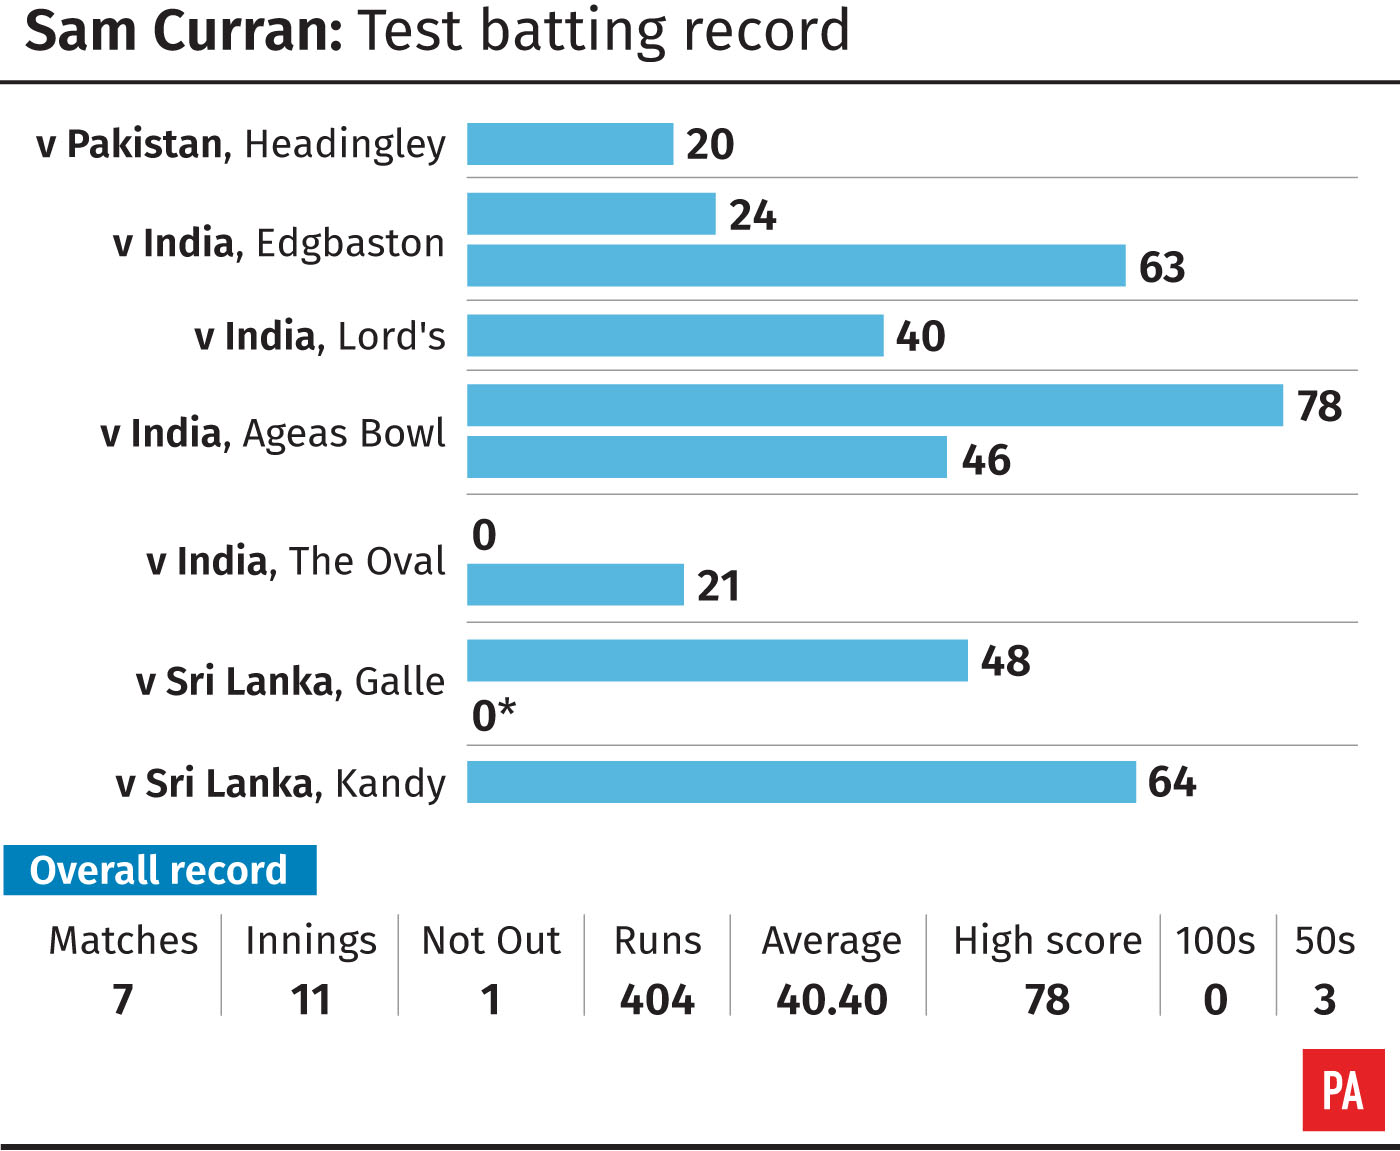 Sam Curran's Test batting record